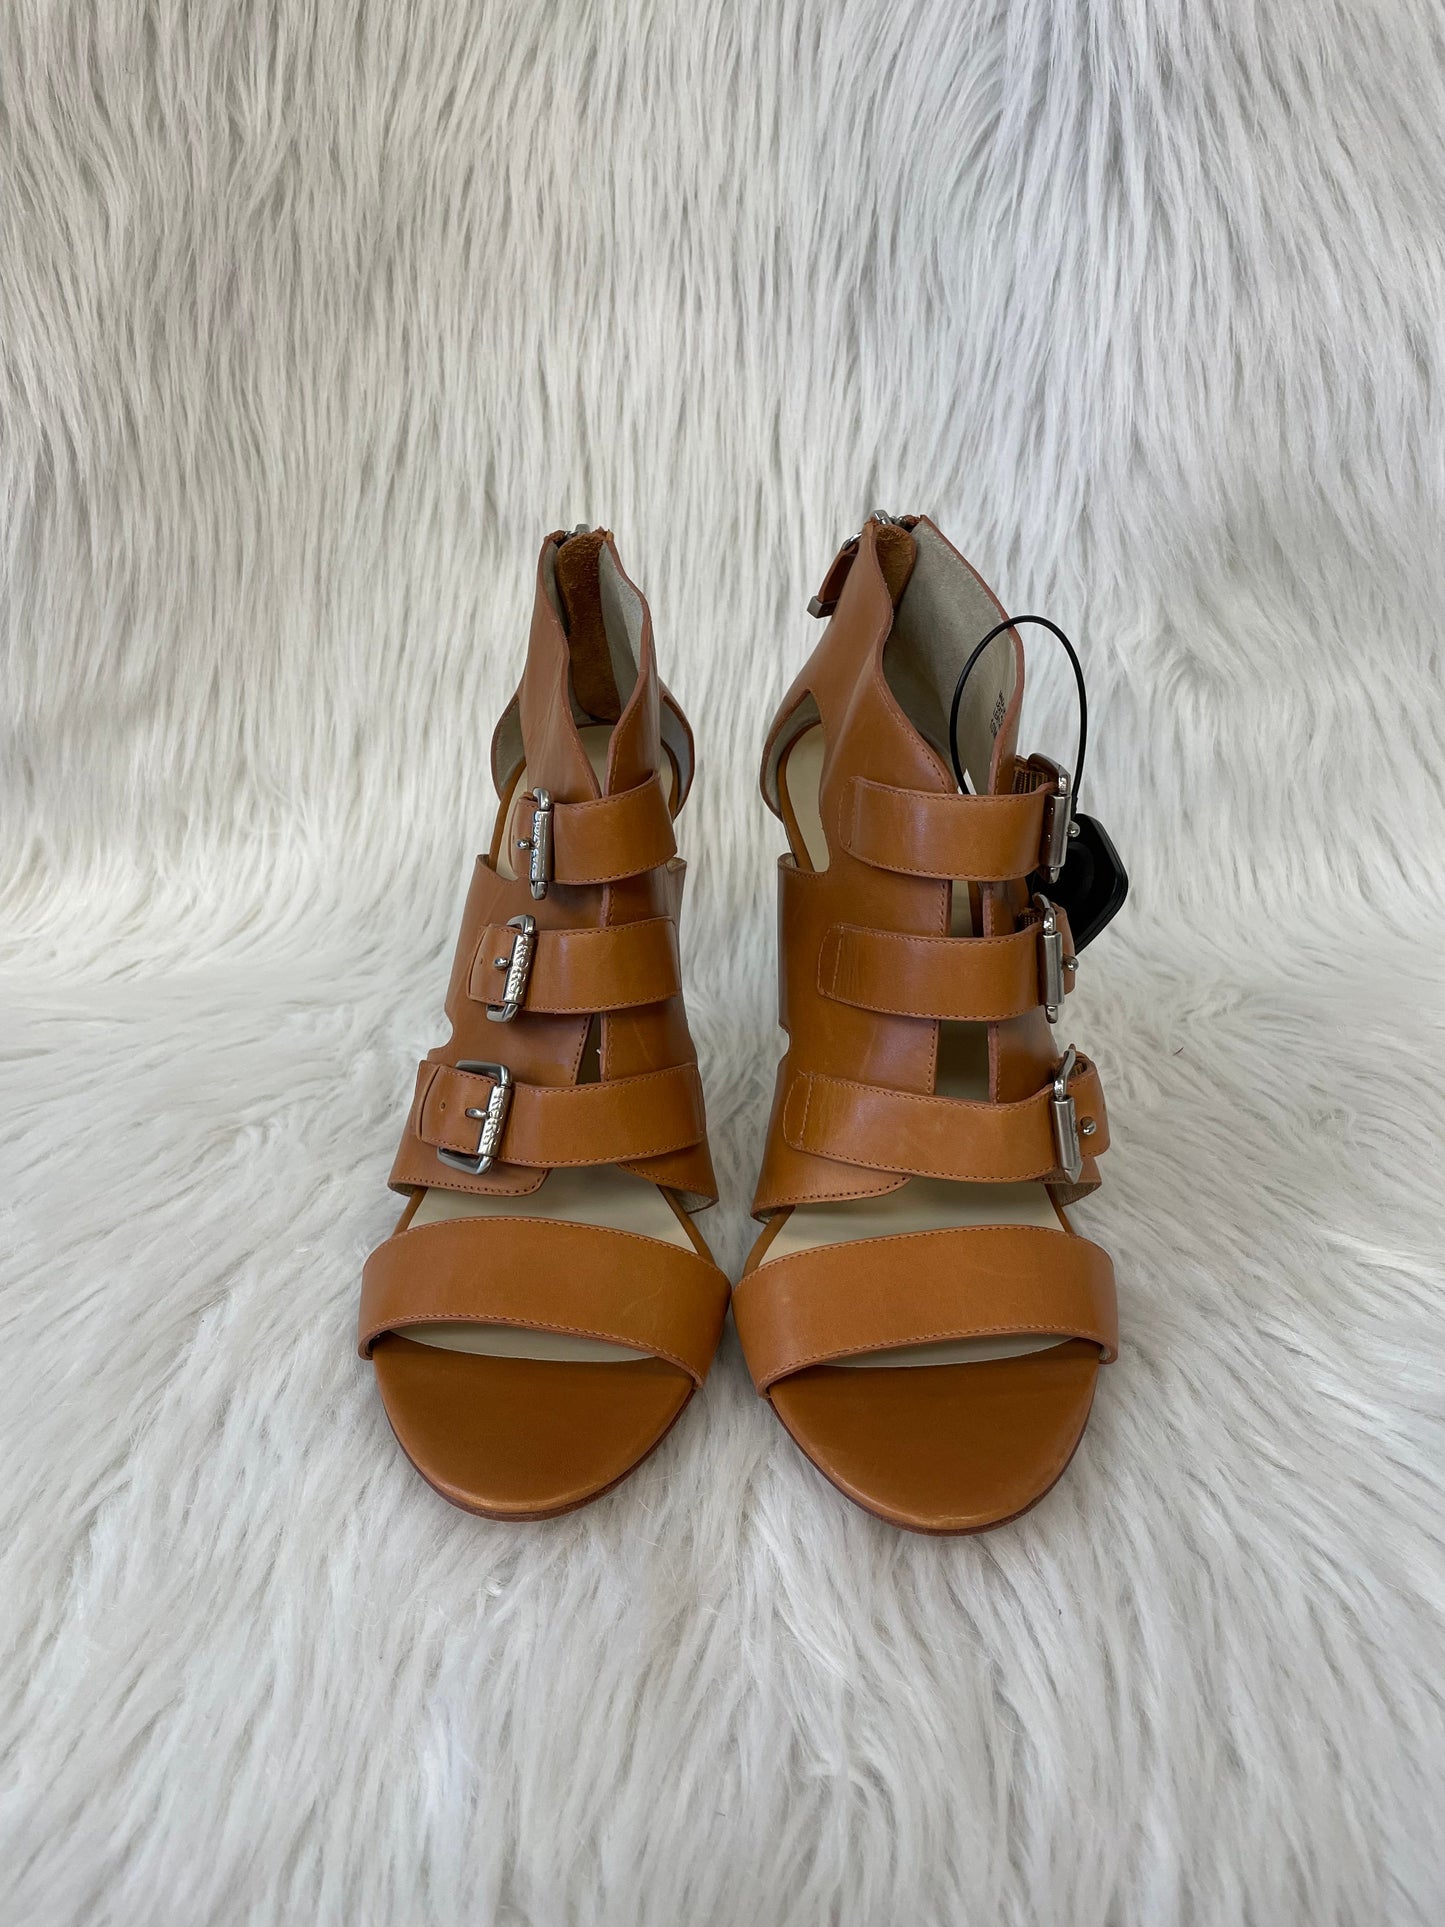 Animal Print Sandals Heels Platform Corkys, Size 10